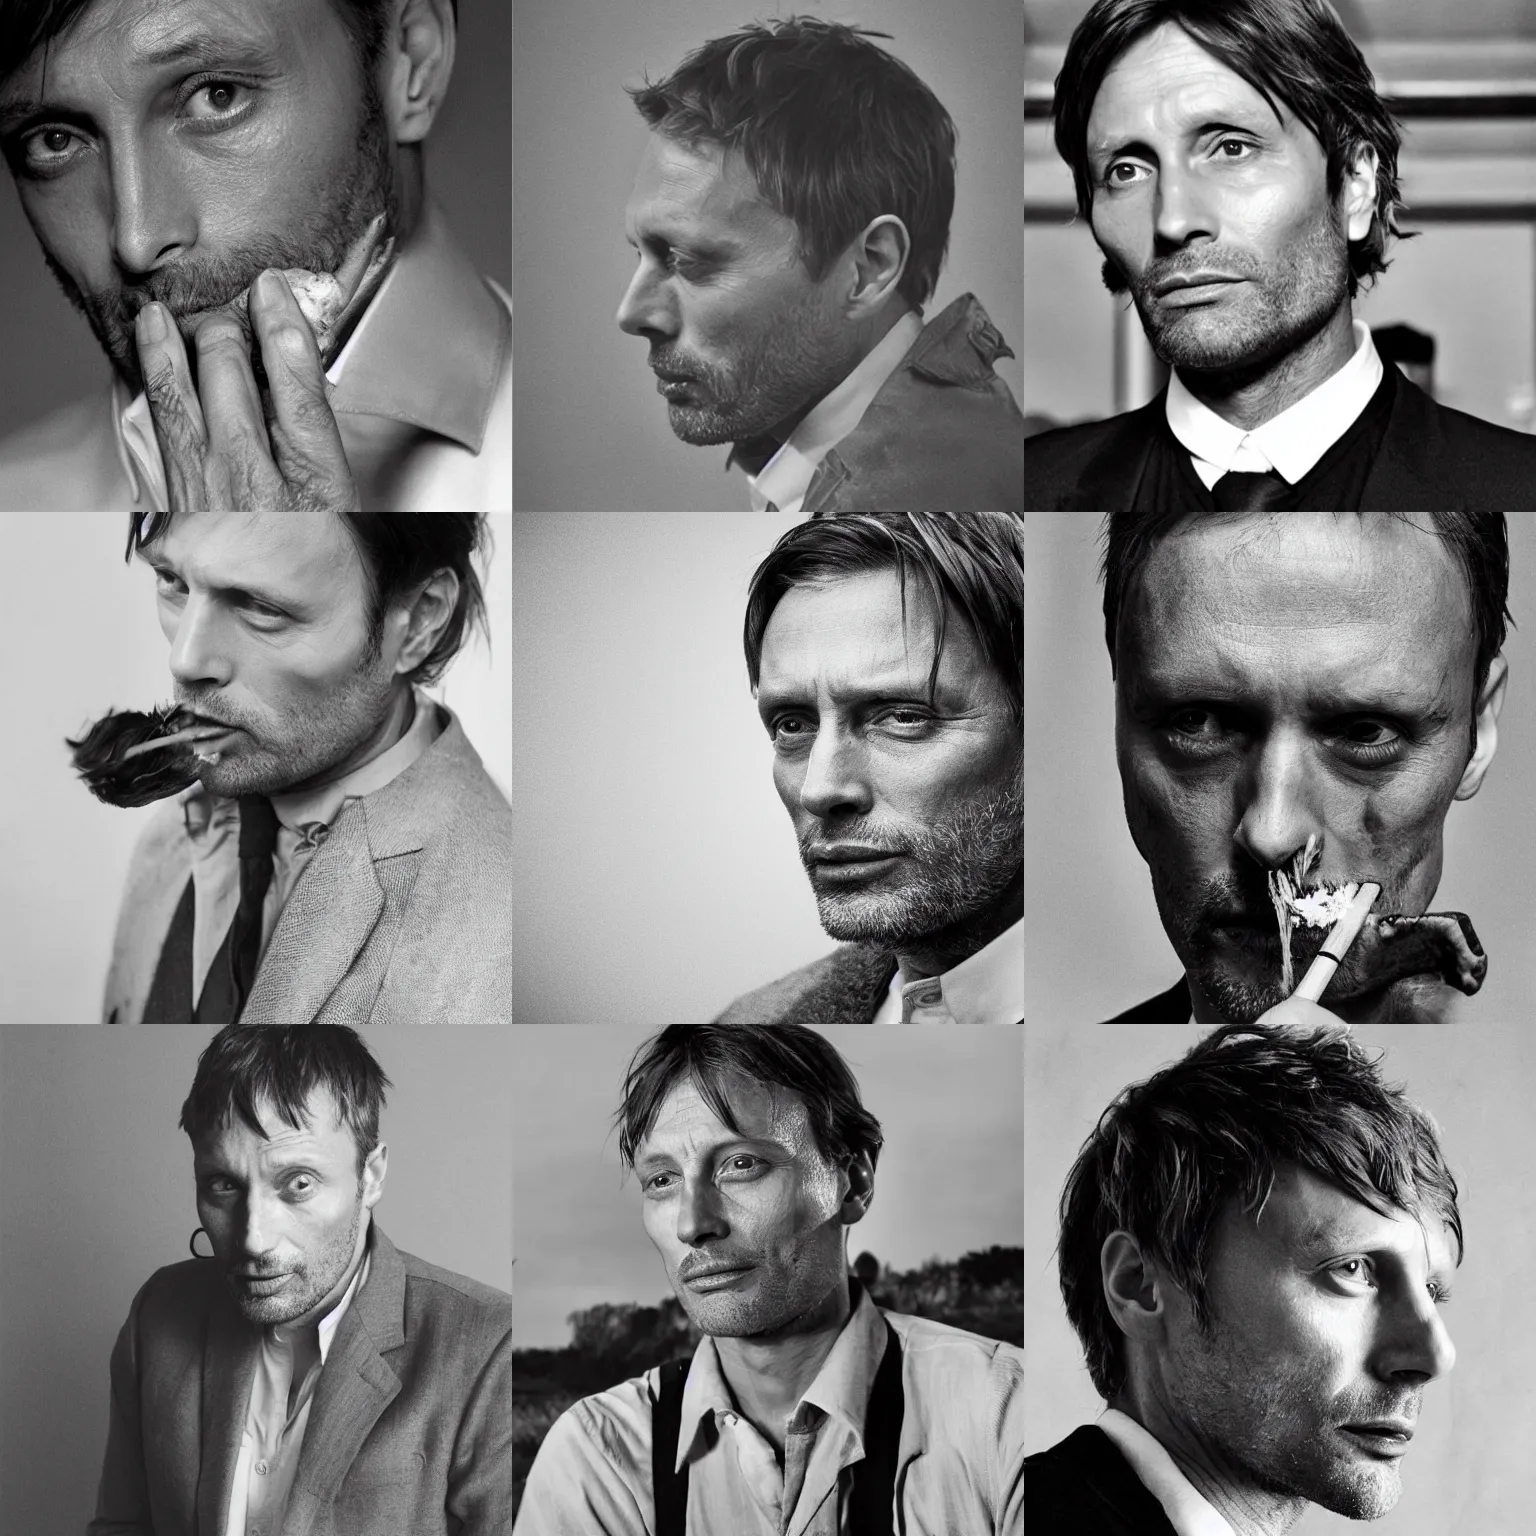 Prompt: Mads Mikkelsen smoking, portrait black and white